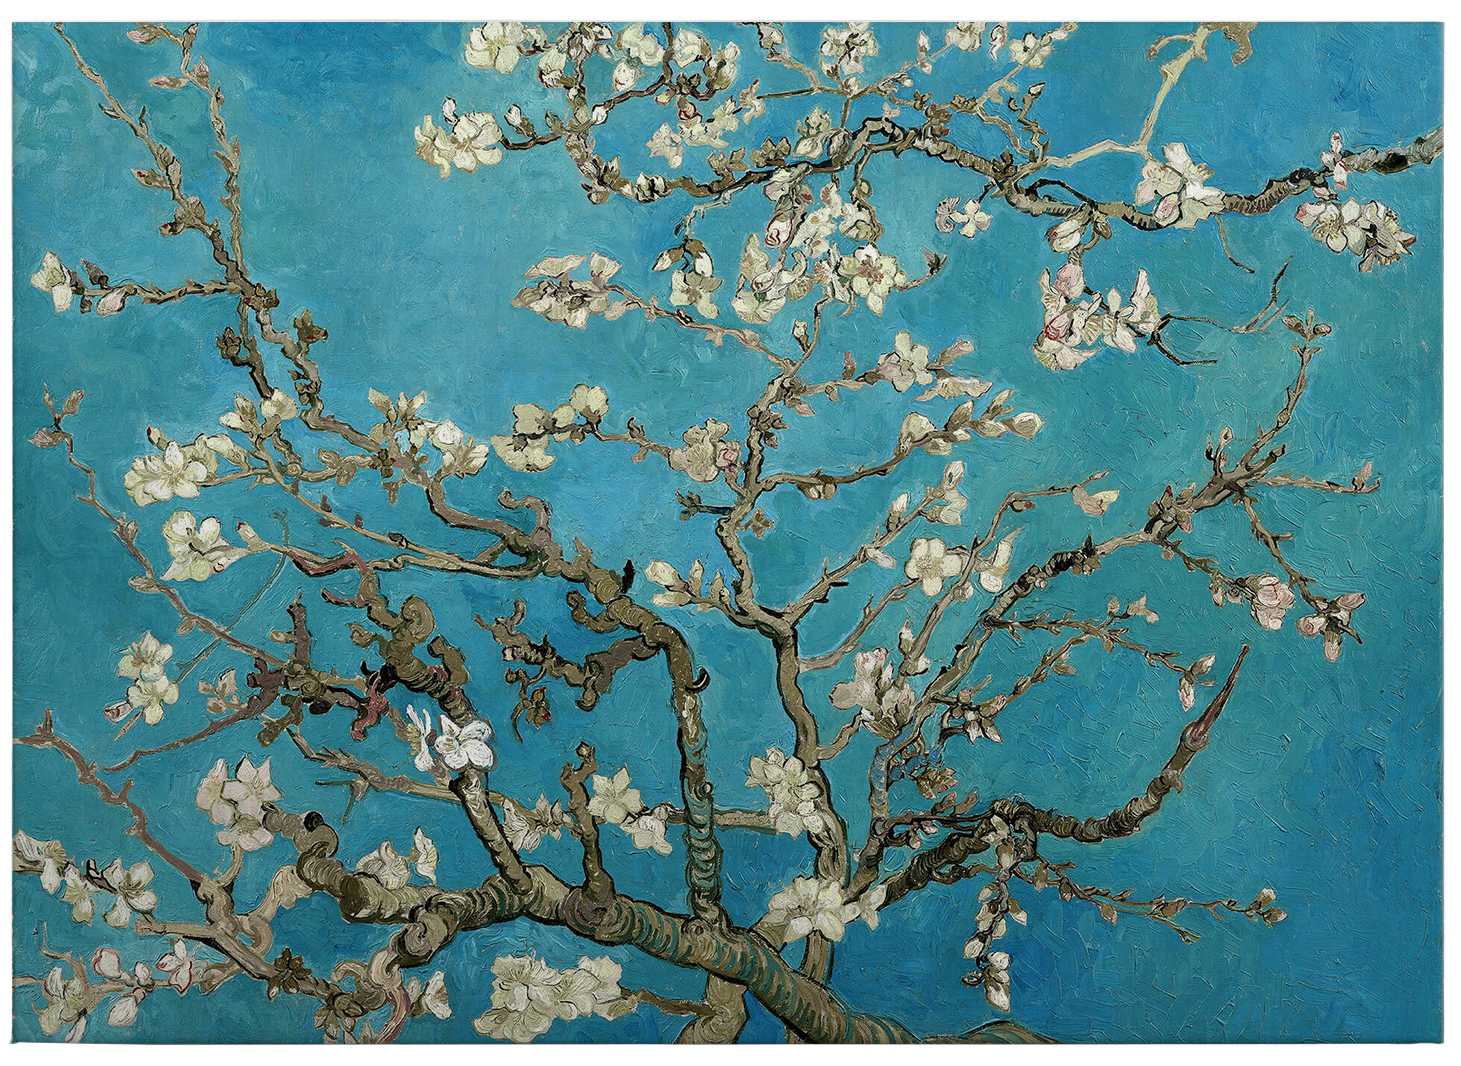             Lienzo "Almendros en flor" de Van Gogh - 0,70 m x 0,50 m
        